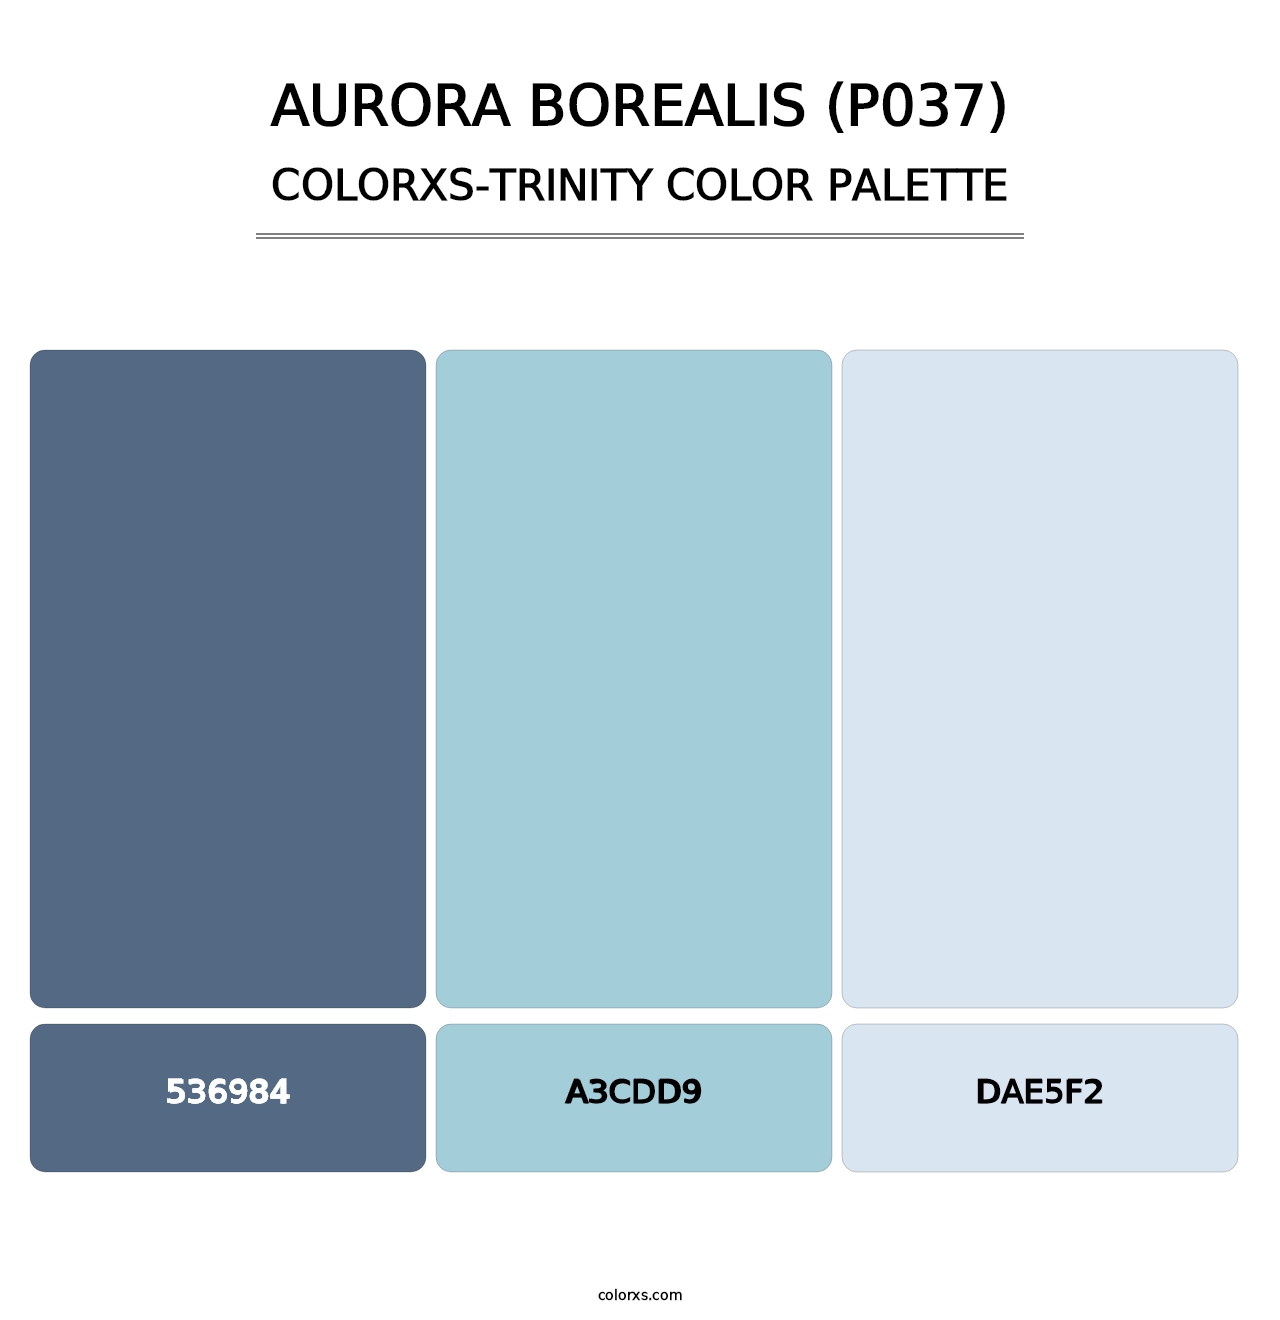 Aurora Borealis (P037) - Colorxs Trinity Palette